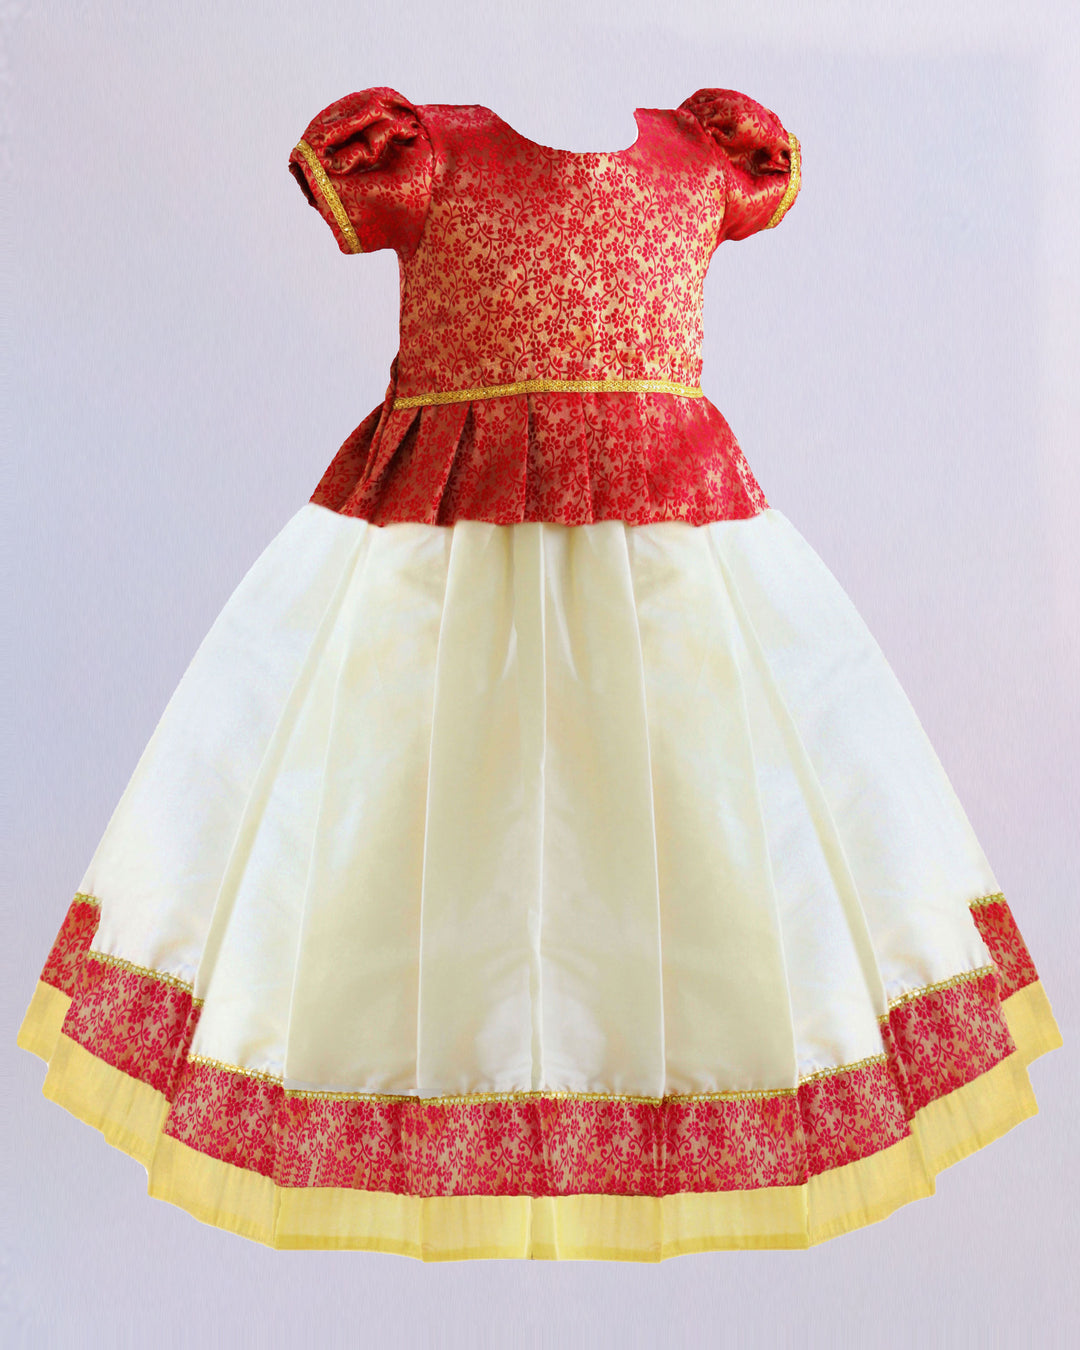 kerala traditional lehenga choli stanwells kids pattu pavadai baby girls silk dress